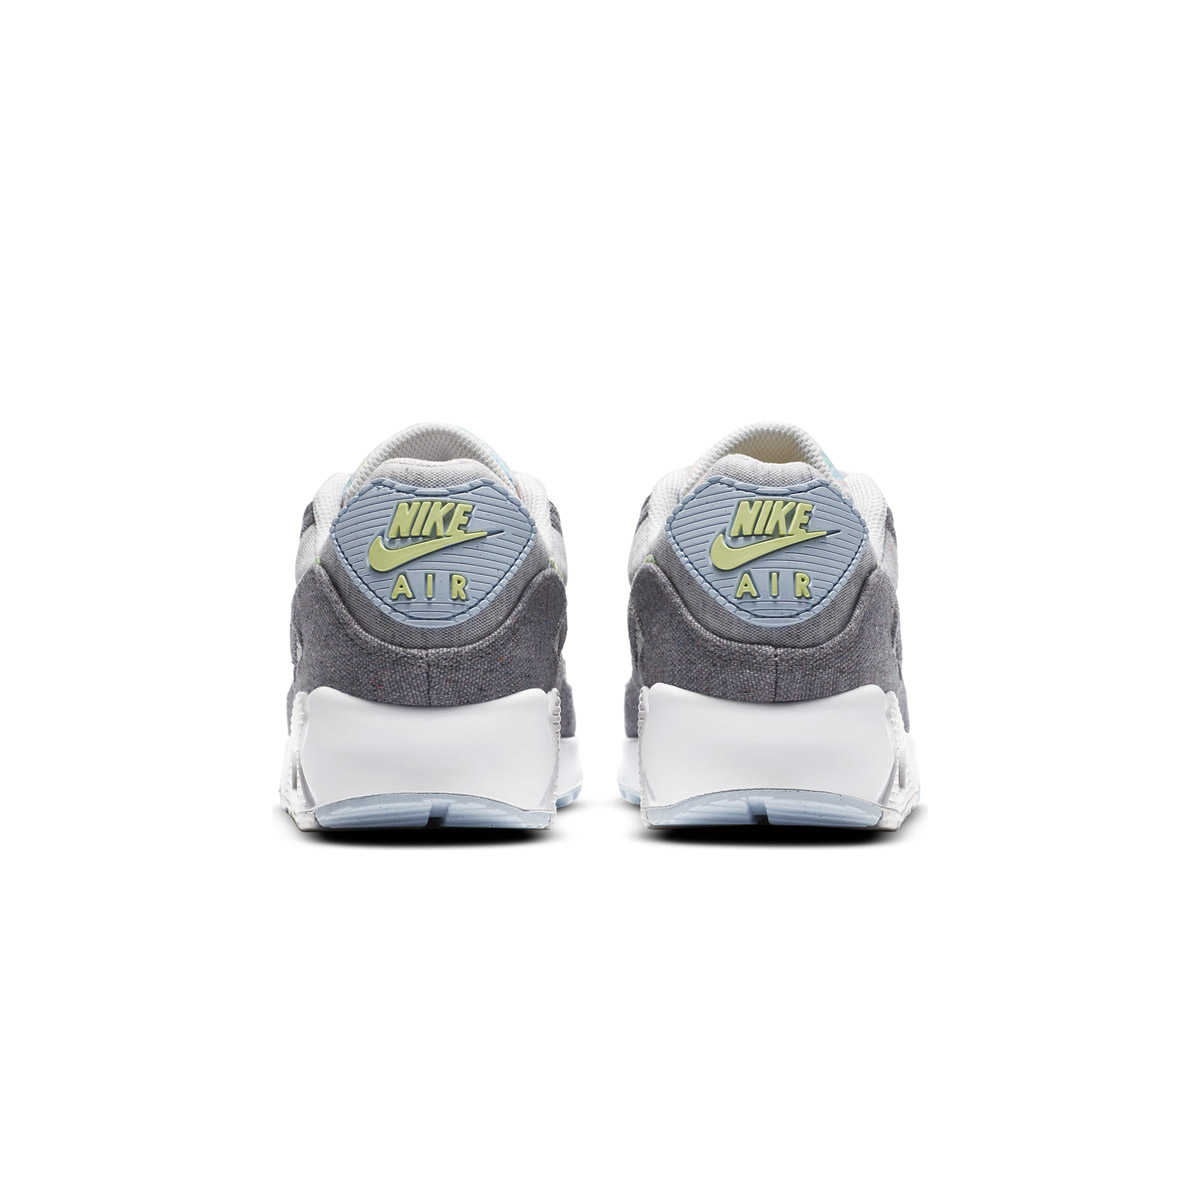 Zapatillas Nike Air Max 90 Nrg,  image number null